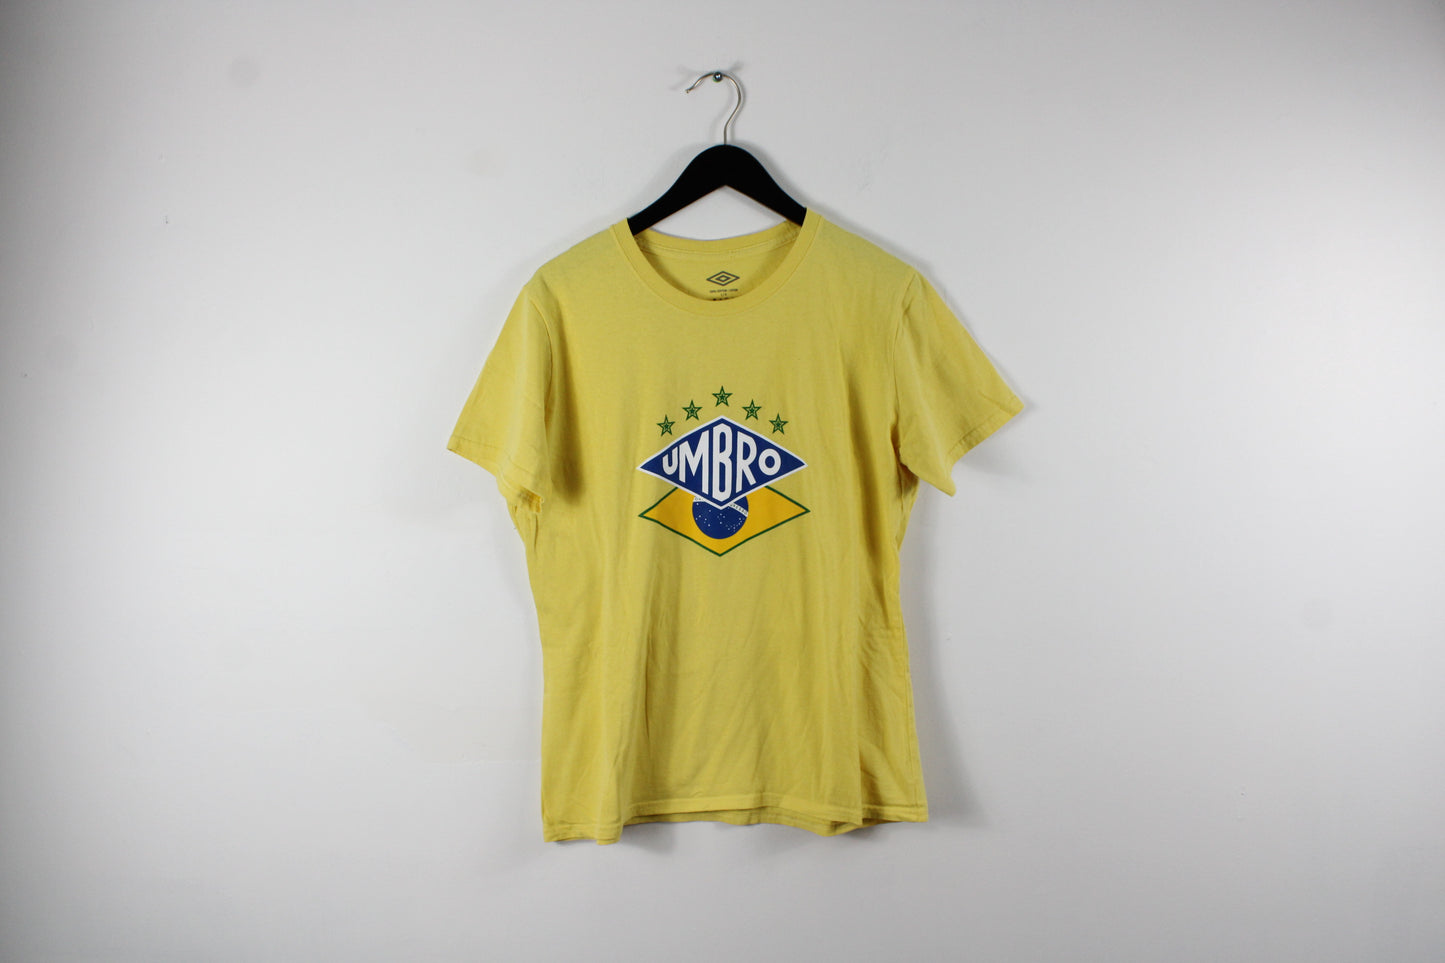 Brazil-Umbro T-Shirt / Vintage Logo Tee Shirt / Yellow & Blue / 90s Hip Hop Clothing / Streetwear